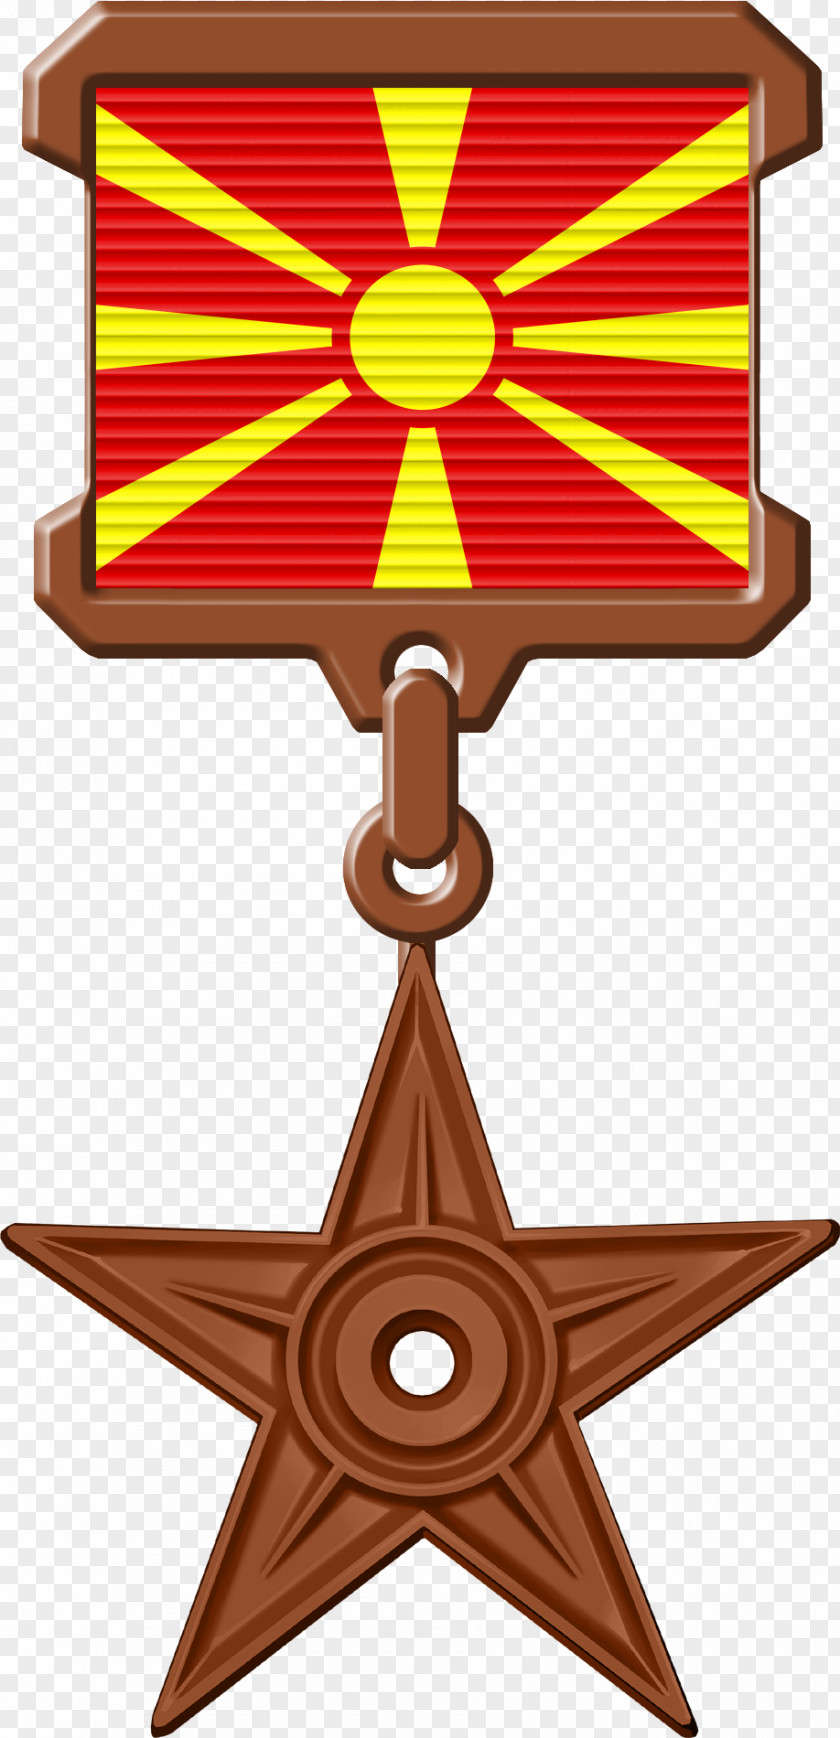 Republic Communism Communist Symbolism Hammer And Sickle Red Star Clip Art PNG